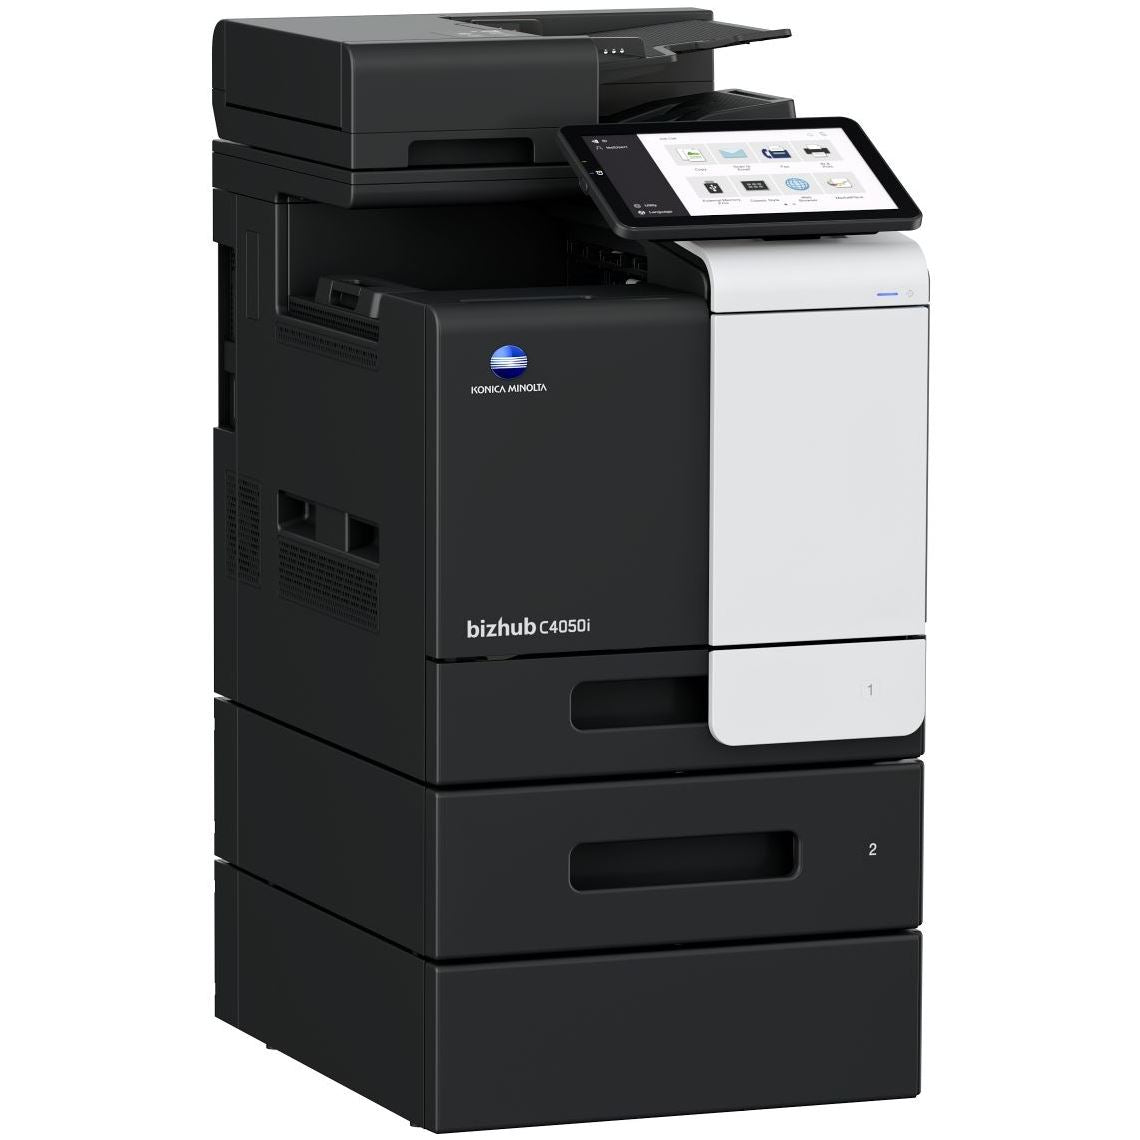 Konica Minolta bizhub C4050i A4 MFD.  Std print cntrllr and fax. 500 sheets &amp; 100-sheet bypass. Dual Scan-DF and duplex std.